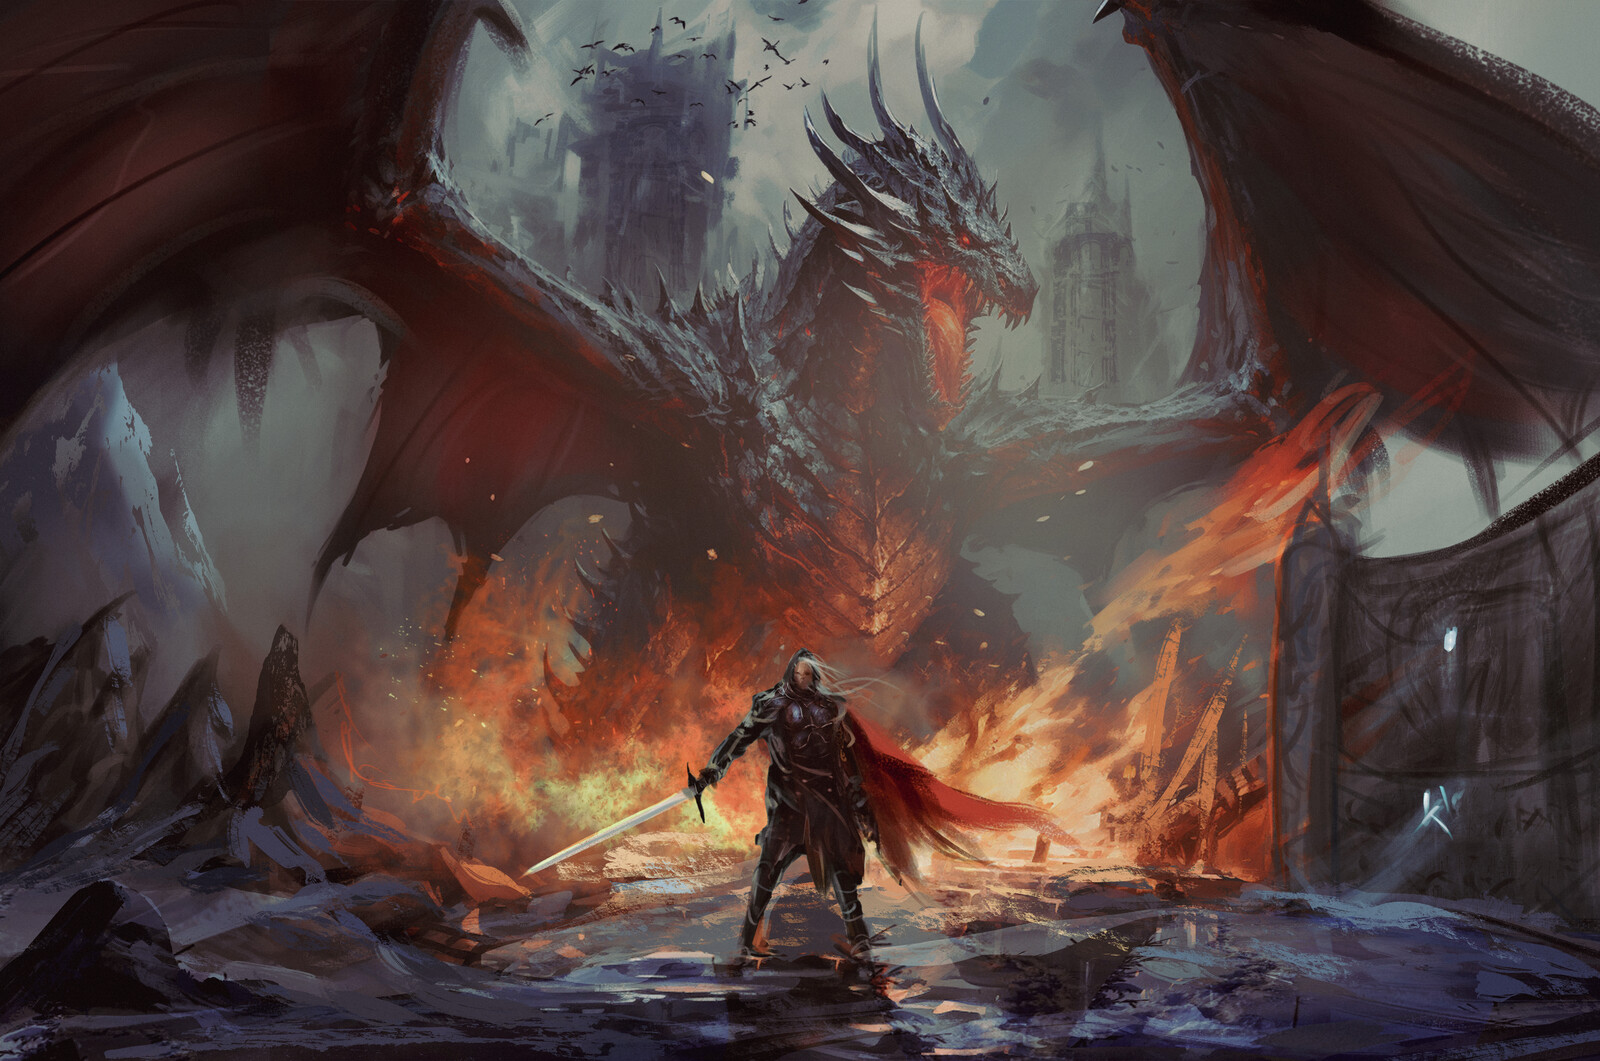 Dragonborn becomes Dark Skyrim